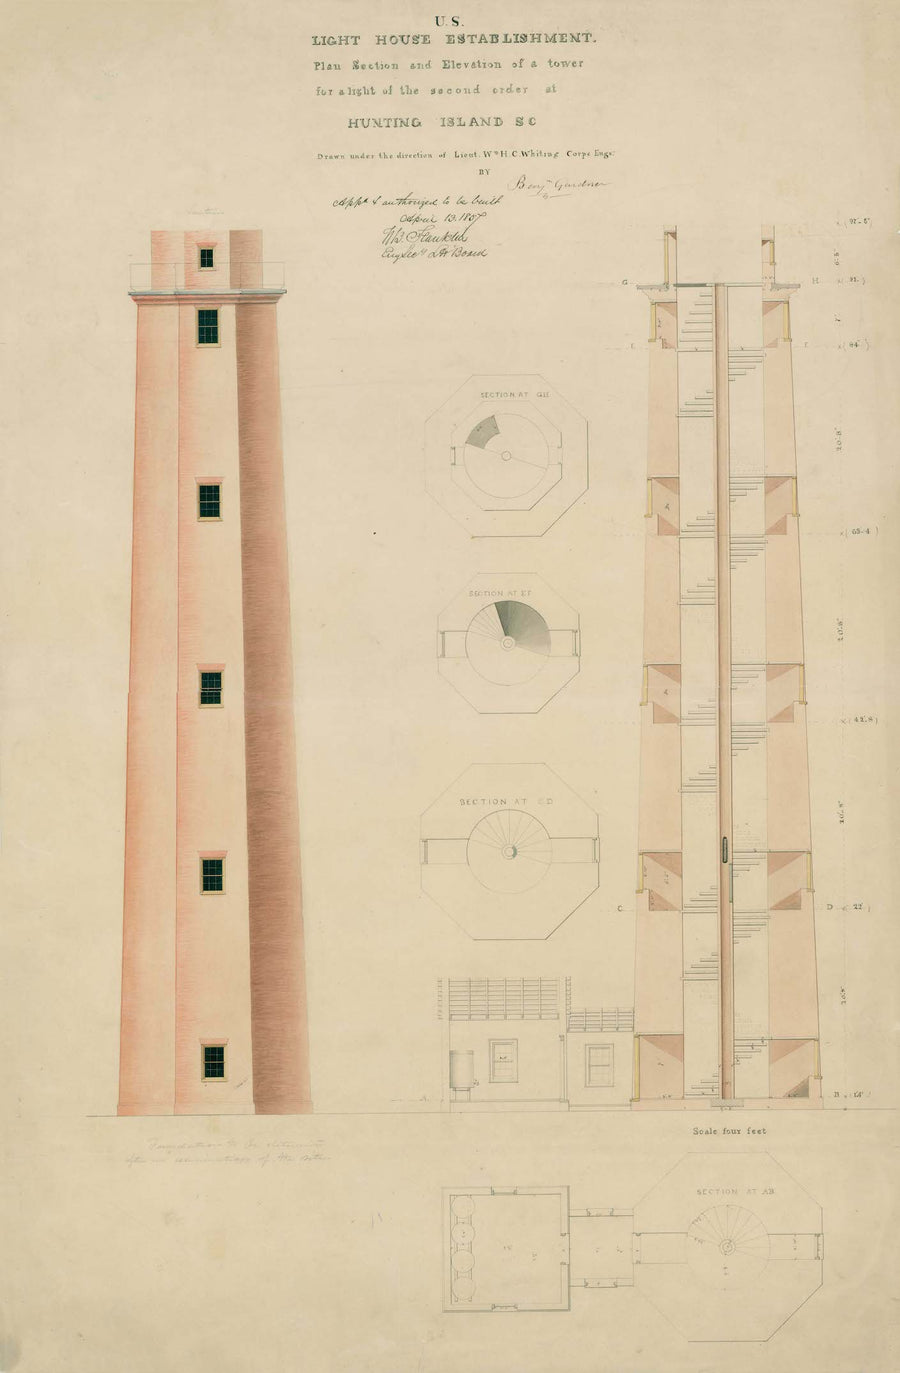 Hunting Island (SC) Lighthouse Plans